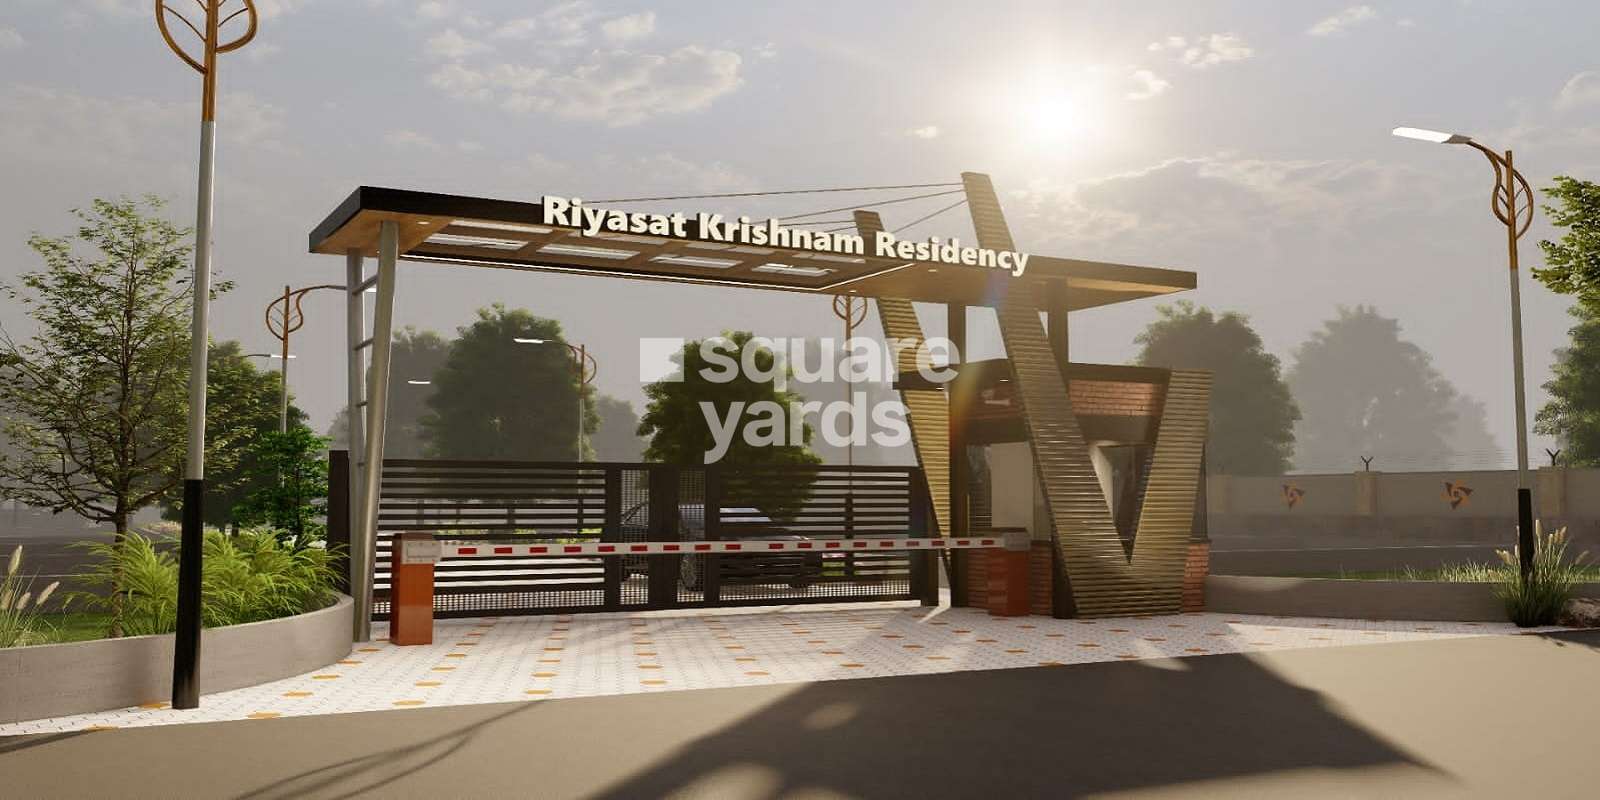 Riyasat Krishnam Residency Cover Image